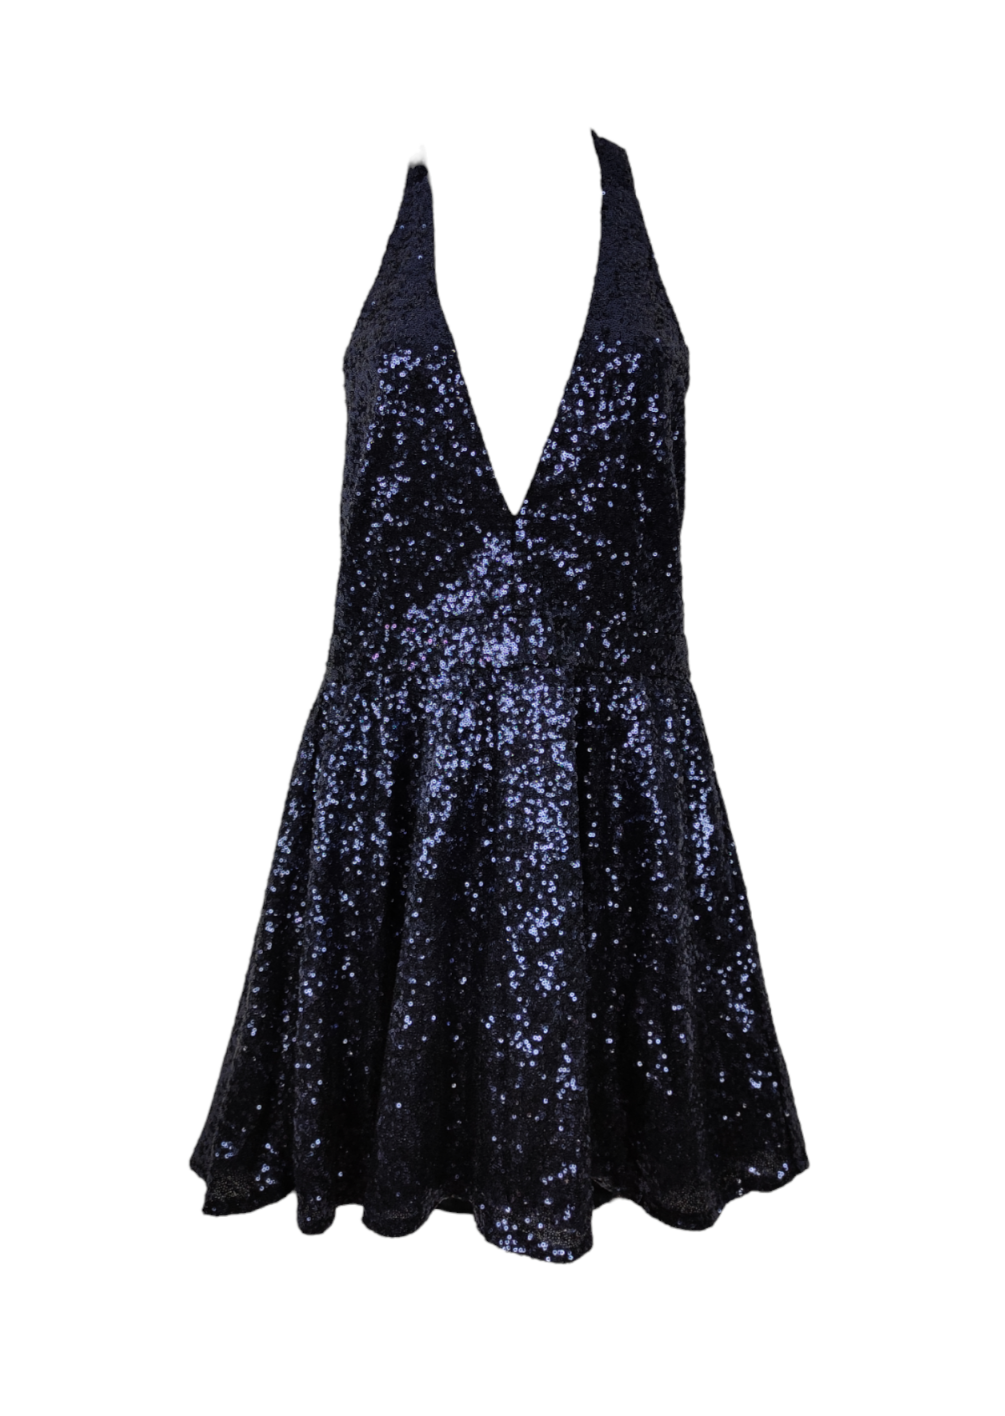 Mini, Ελαστικό Φόρεμα MISSGUIDED σε Σκούρο Μπλε Χρώμα με Παγιέτες (Medium)